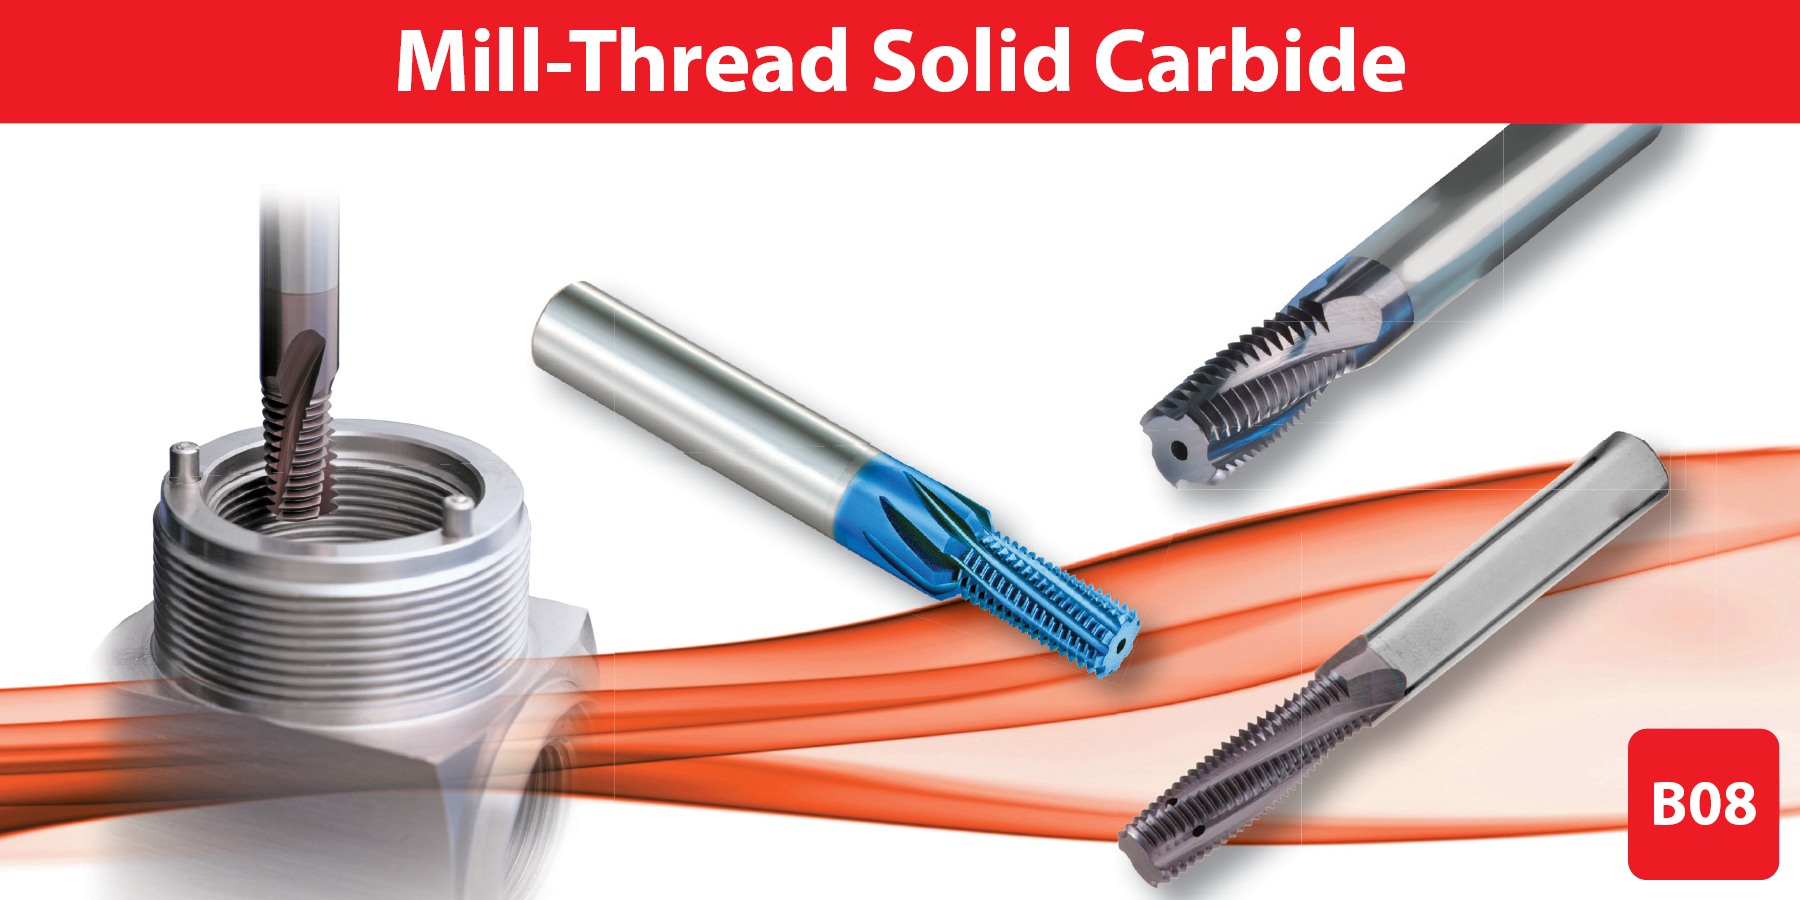 B08_Mill_Thread_Solid_Carbide